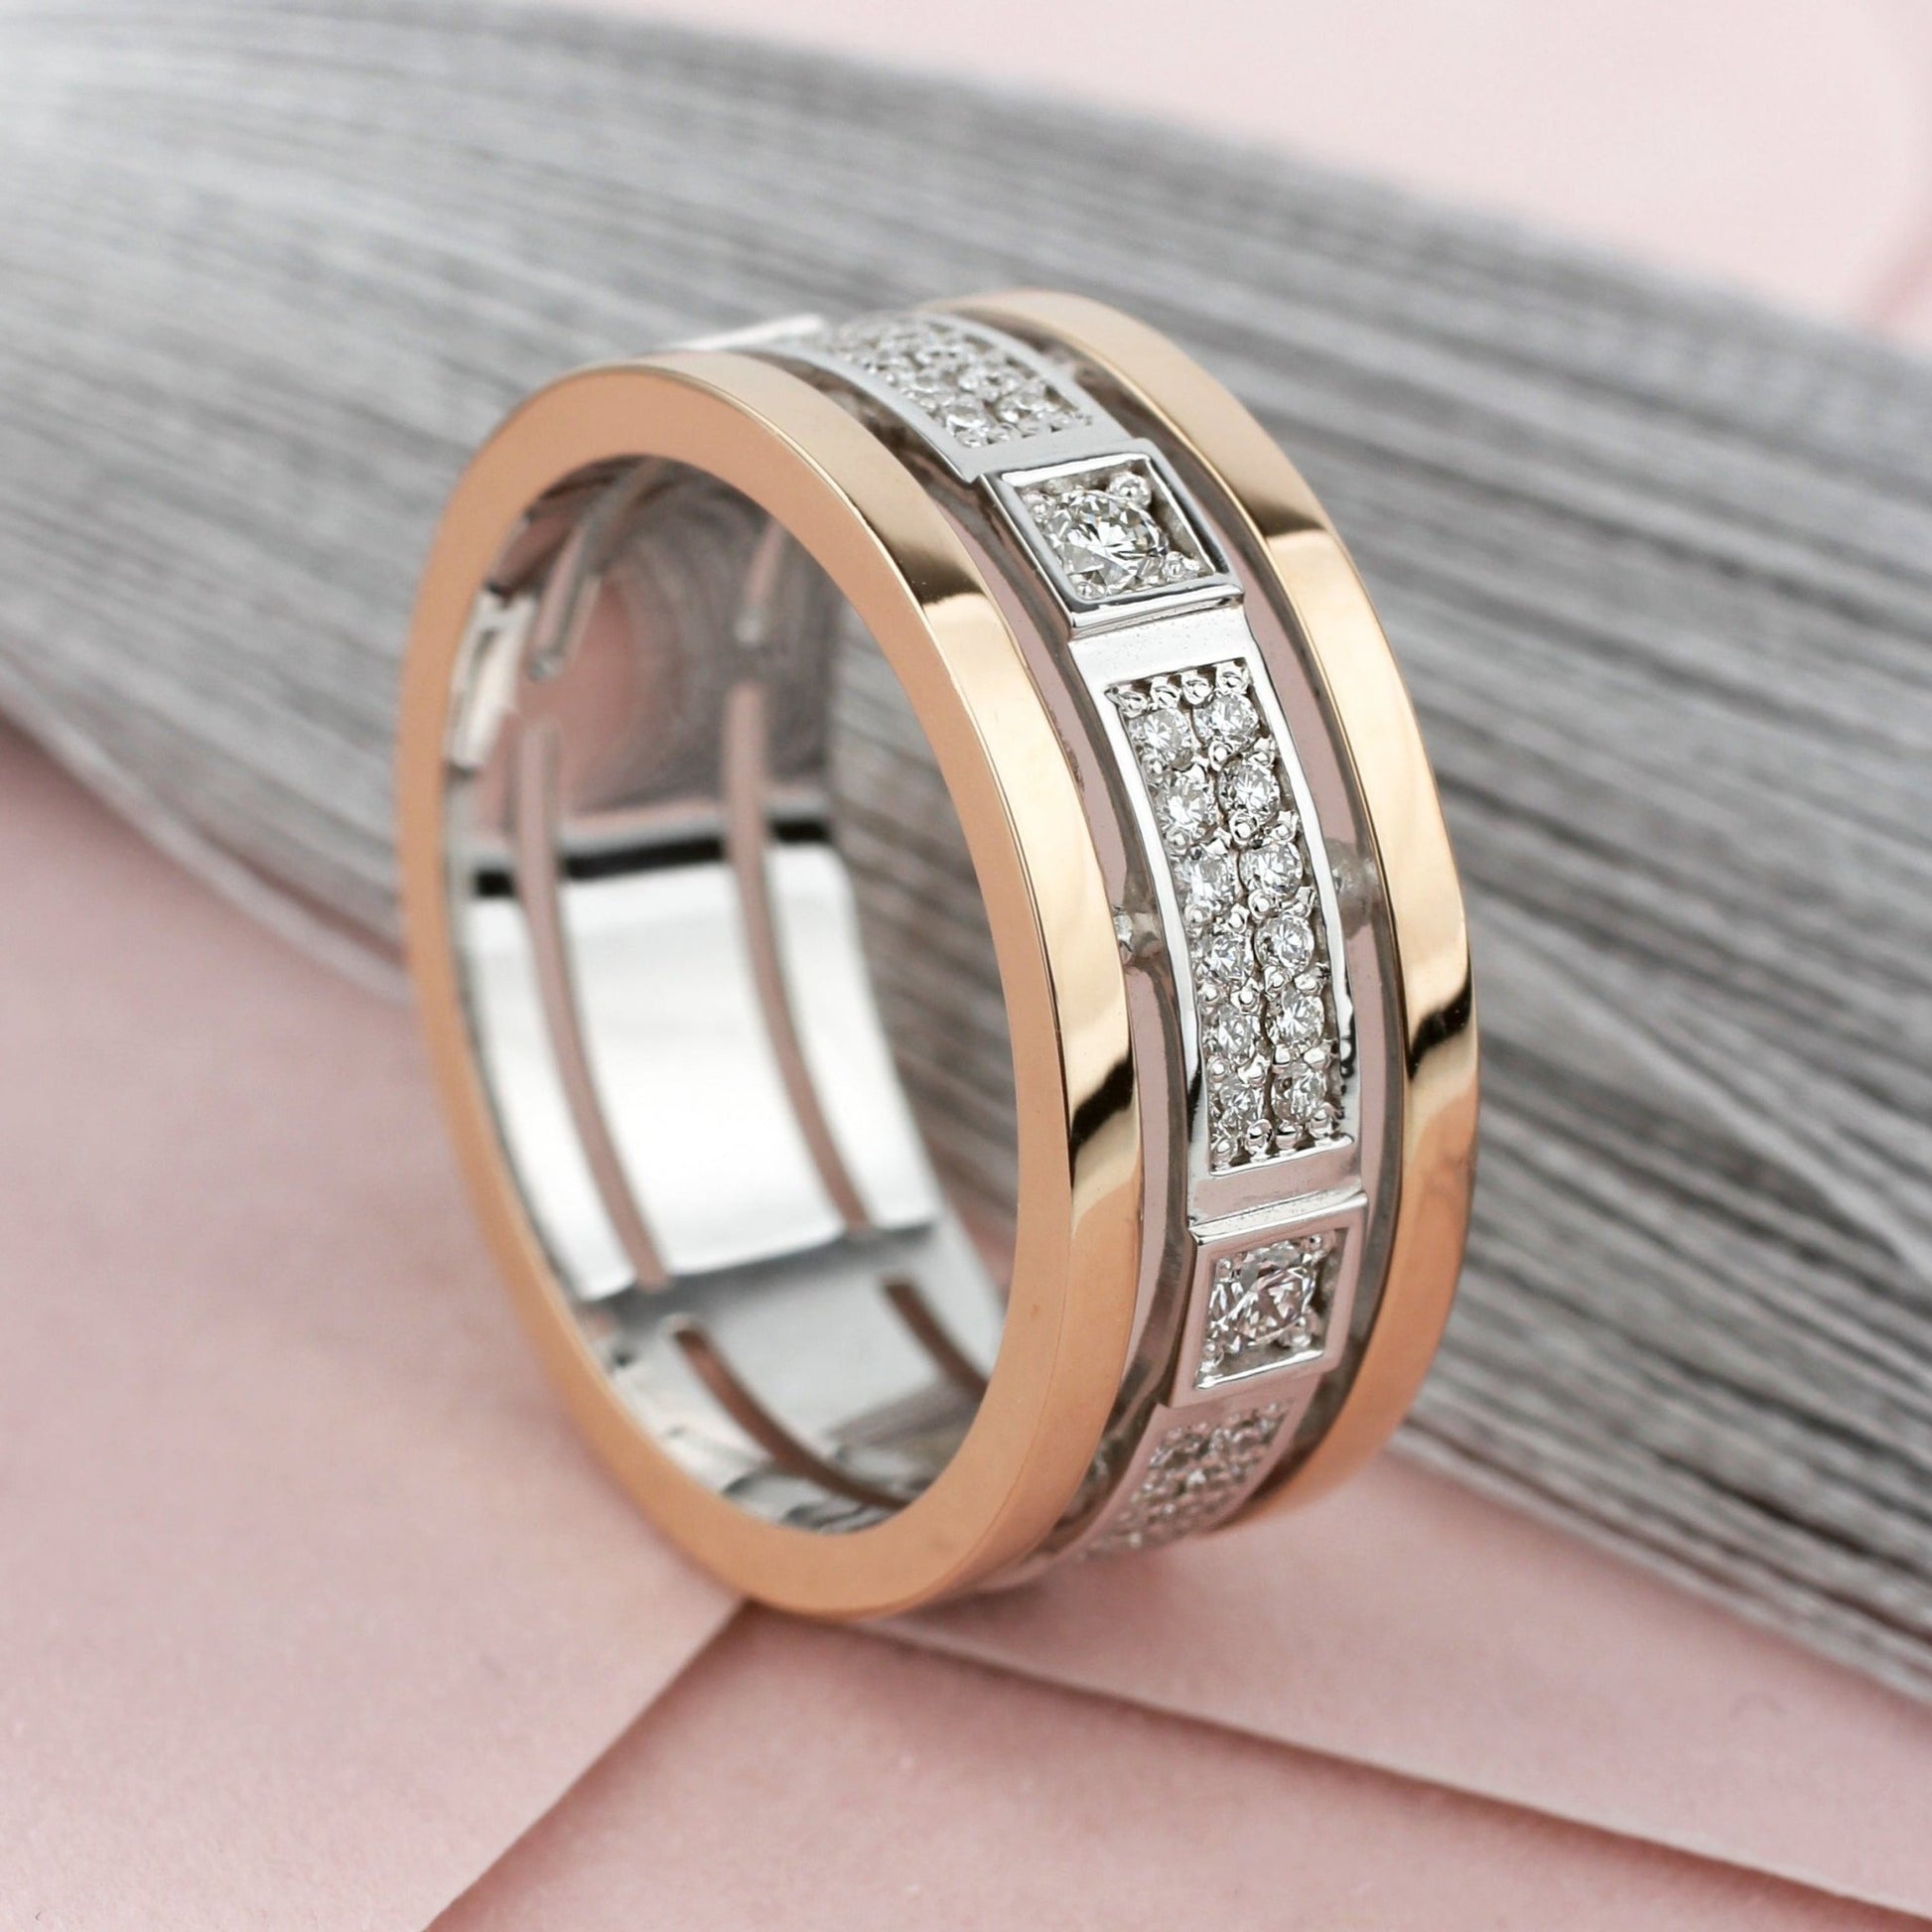 Unique women's wedding ring - escorialjewelry